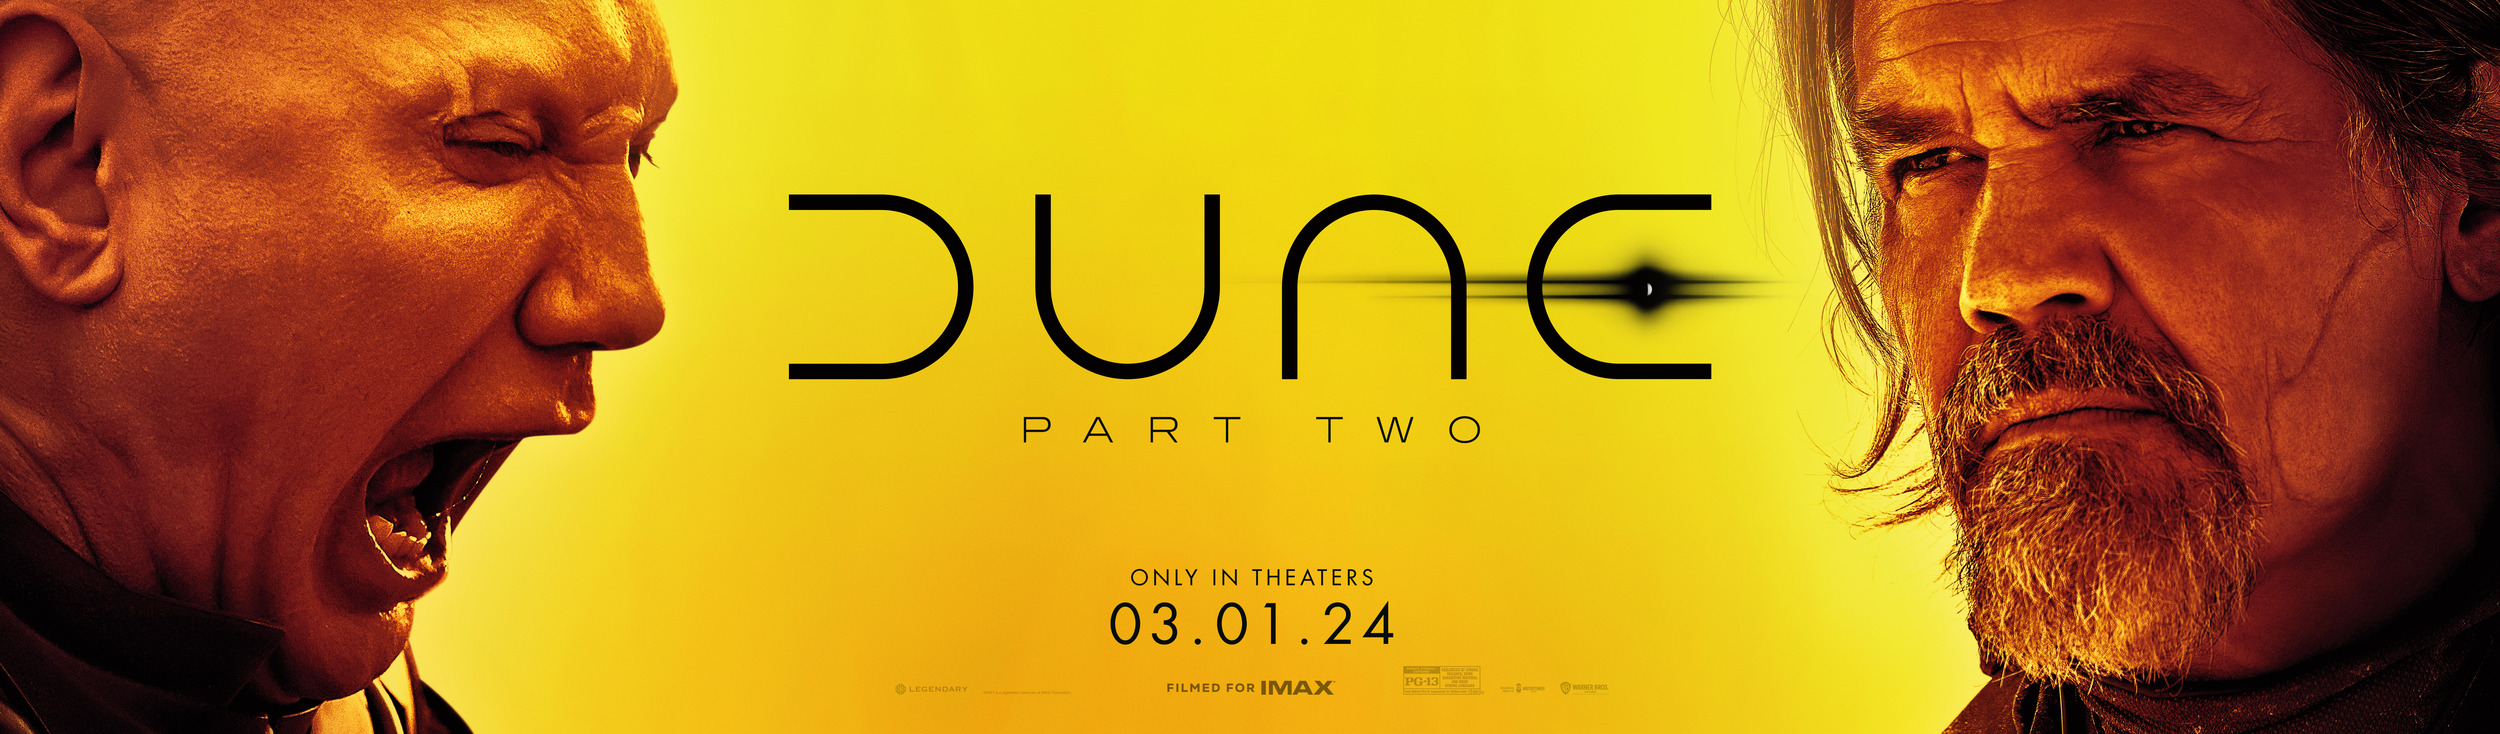 Mega Sized Movie Poster Image for Dune 2 (#24 of 31)